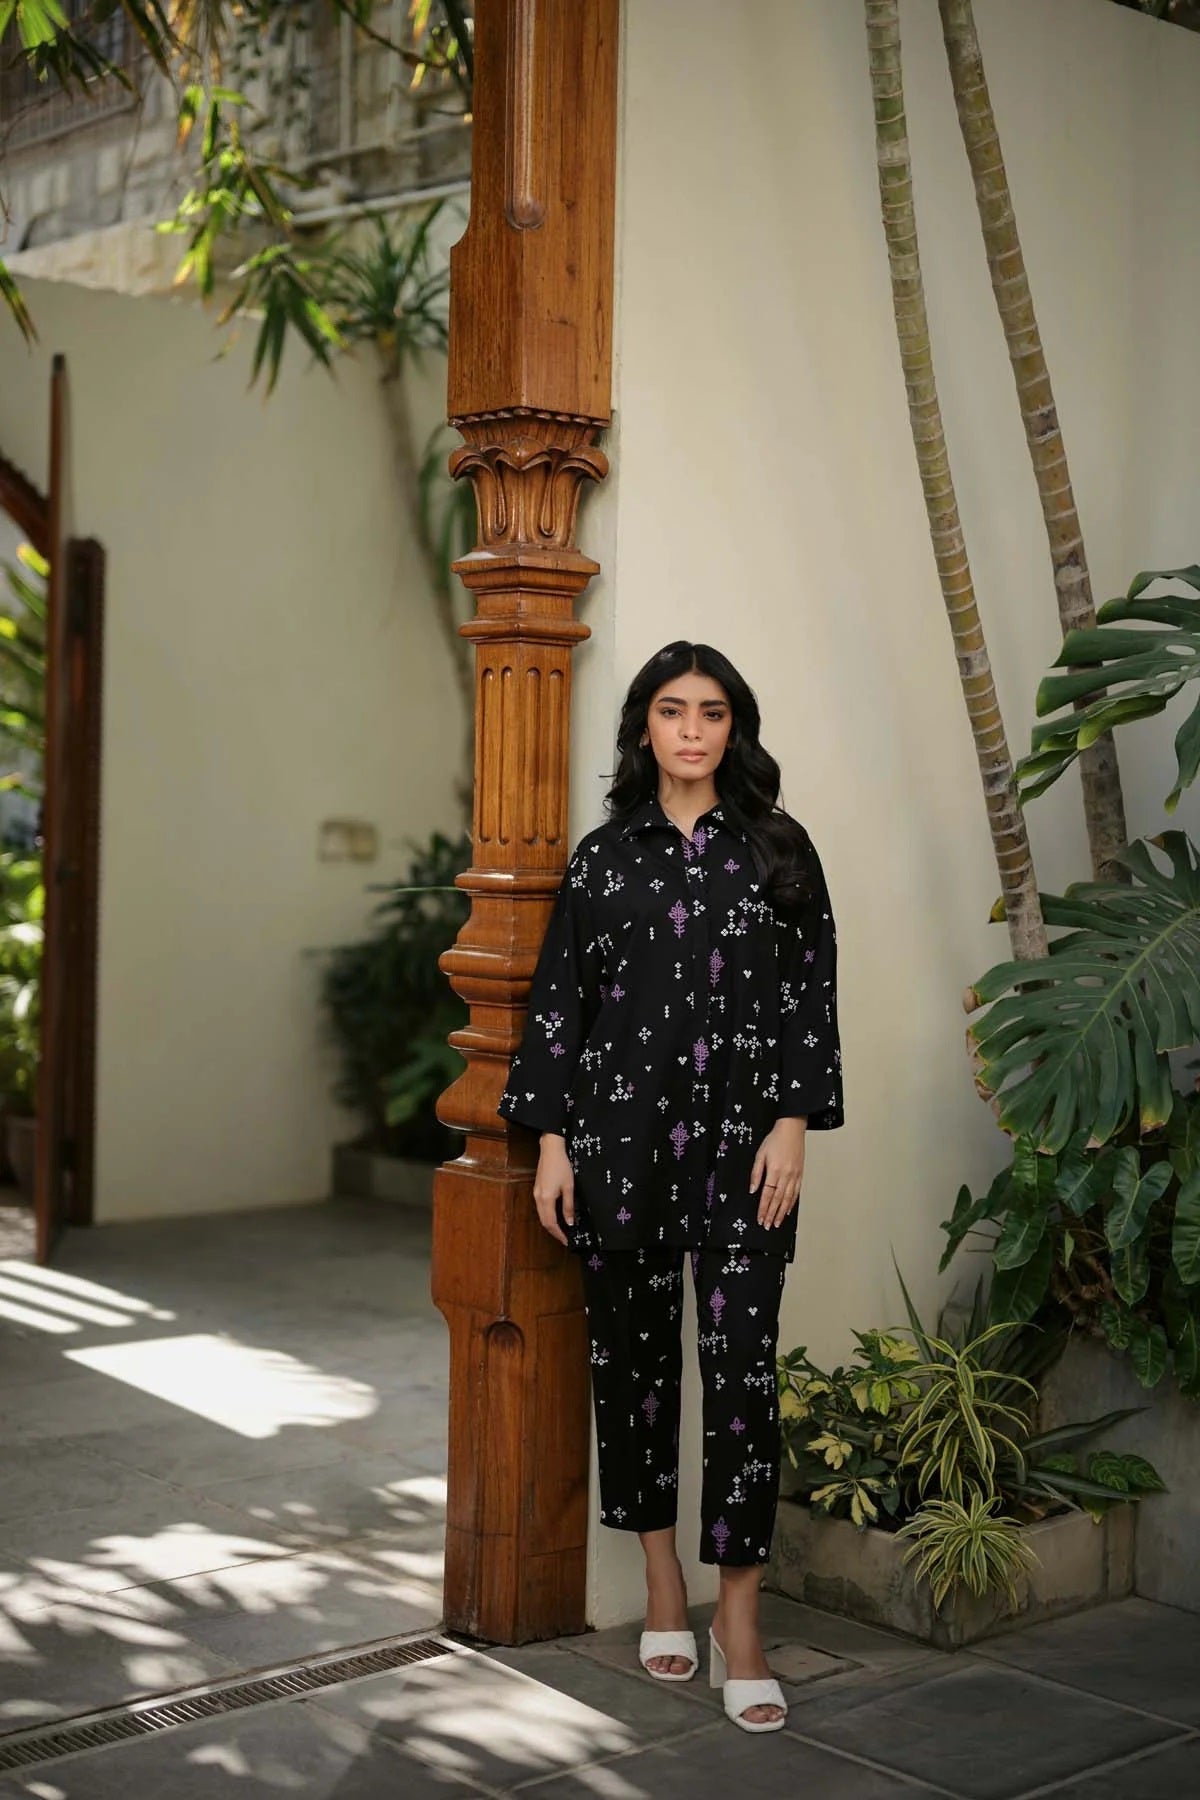 Sahar Printed Lawn Suits Unstitched 2 Piece SHR-S24-PL-V1-19 - Summer Collection